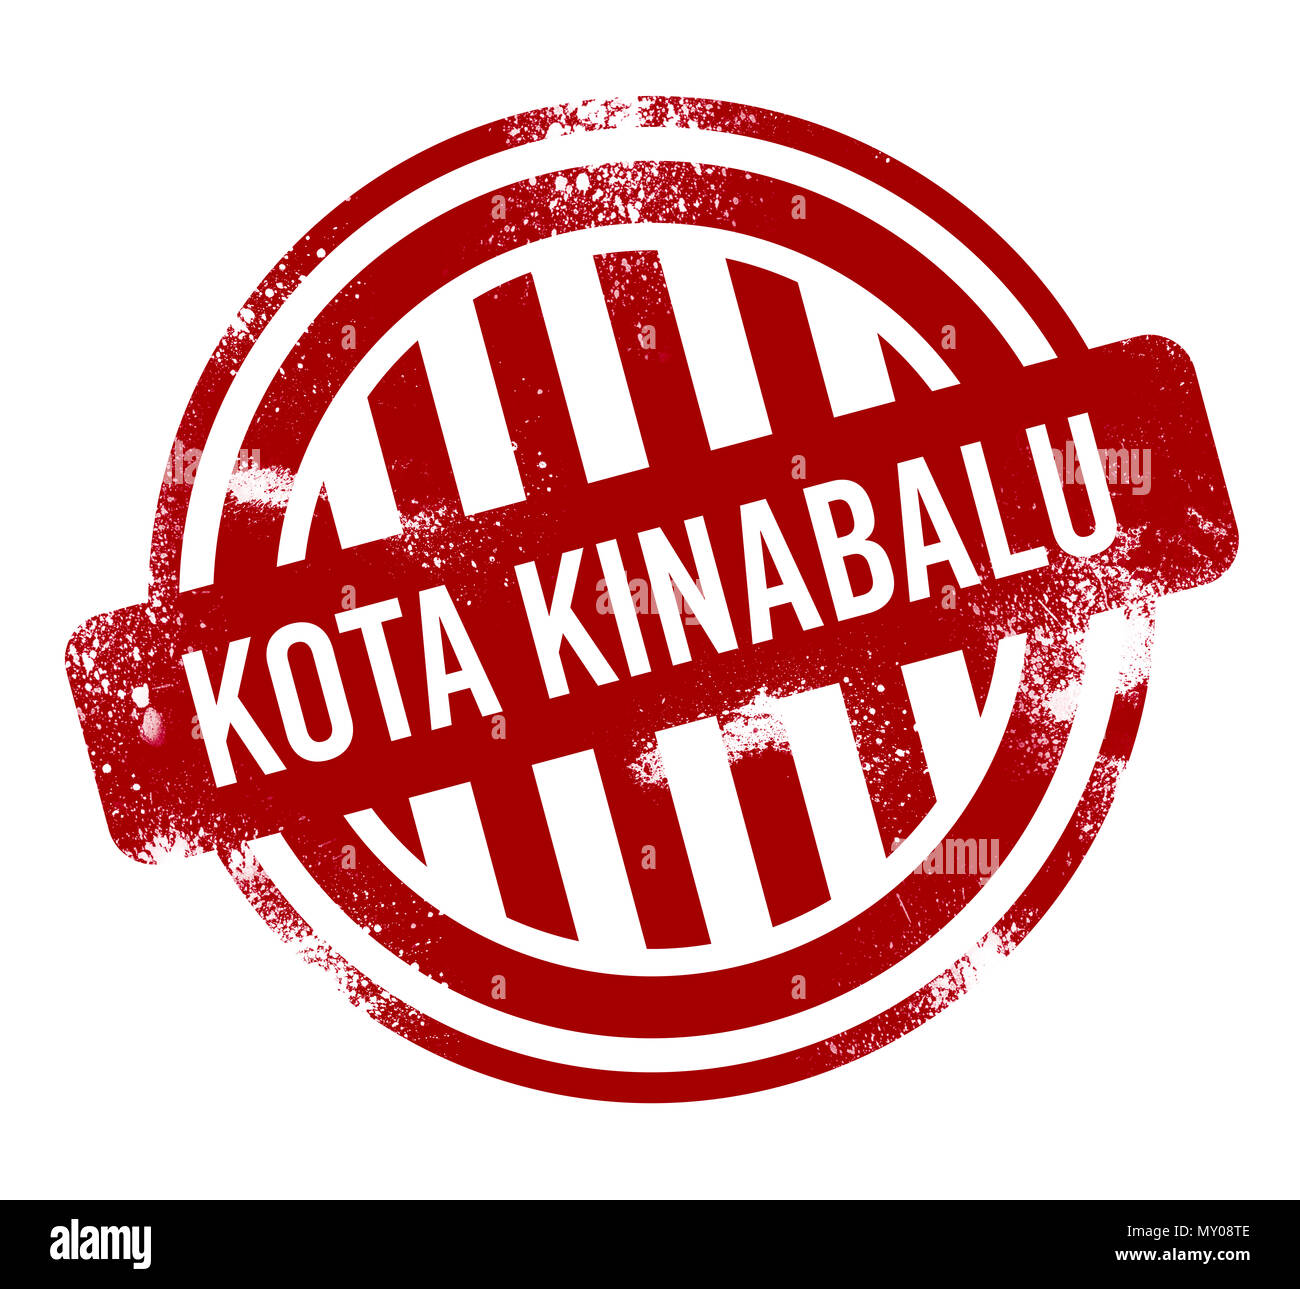 Kota Kinabalu - grunge stamp, bouton rouge Banque D'Images